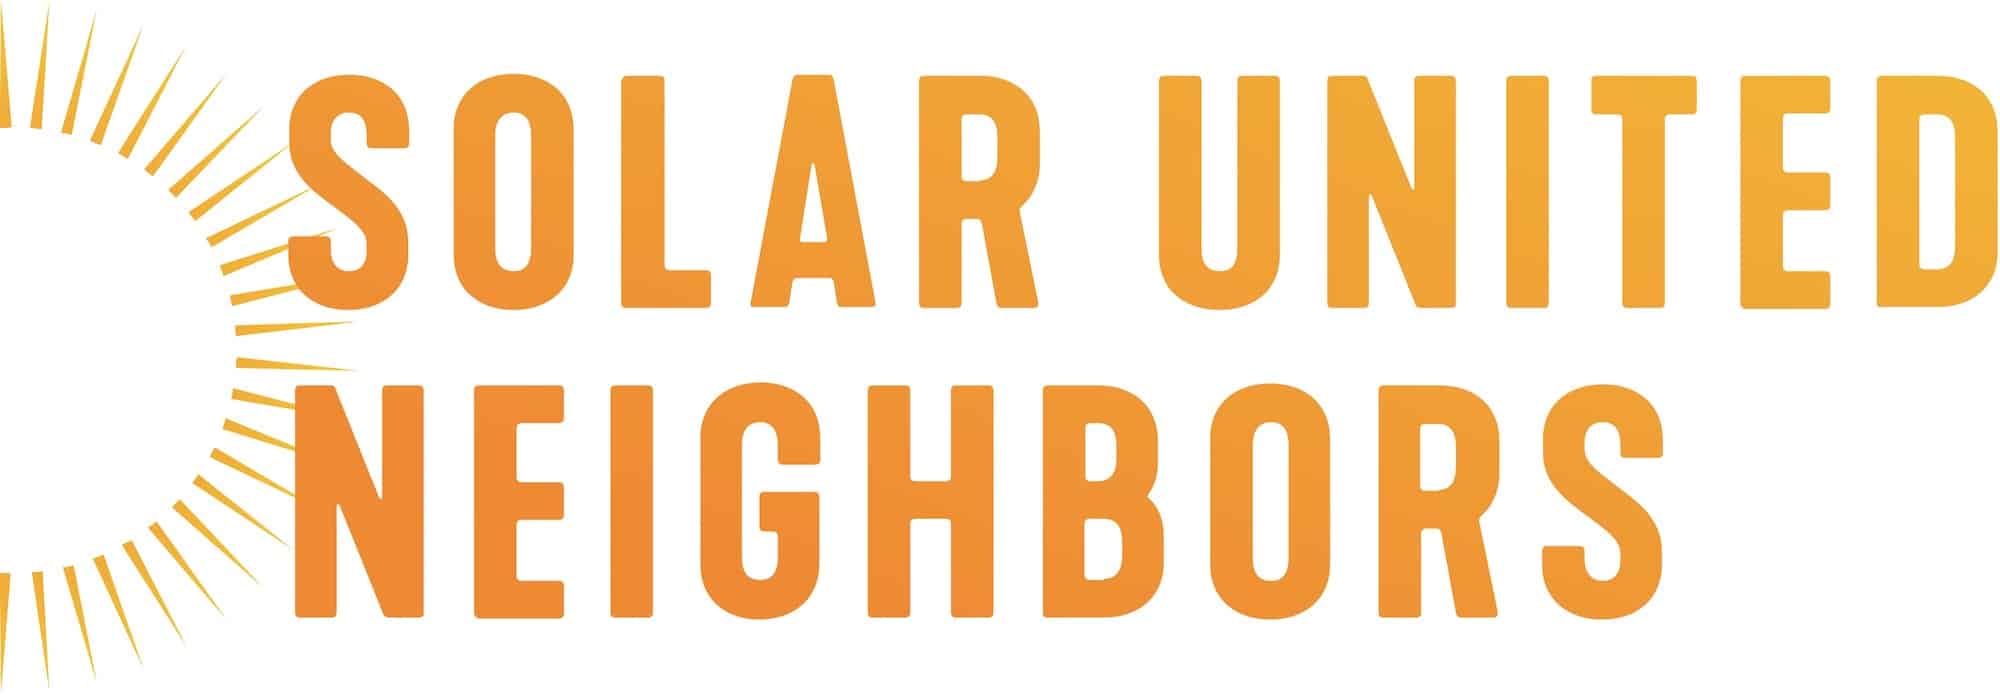 solar-united-neighbors-logo